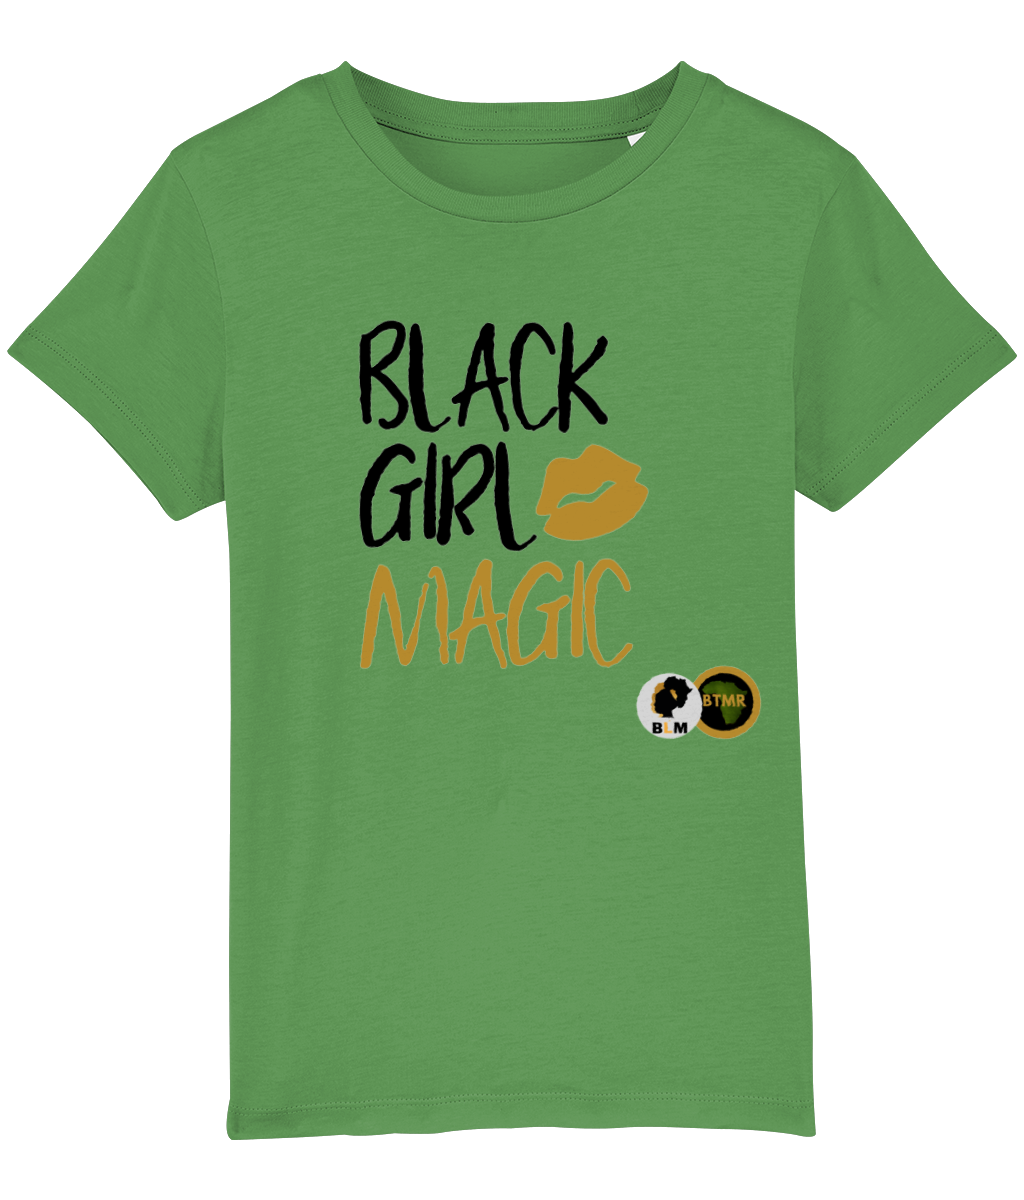 BTMR BlackLikeMe Black Girl Magic T Shirt